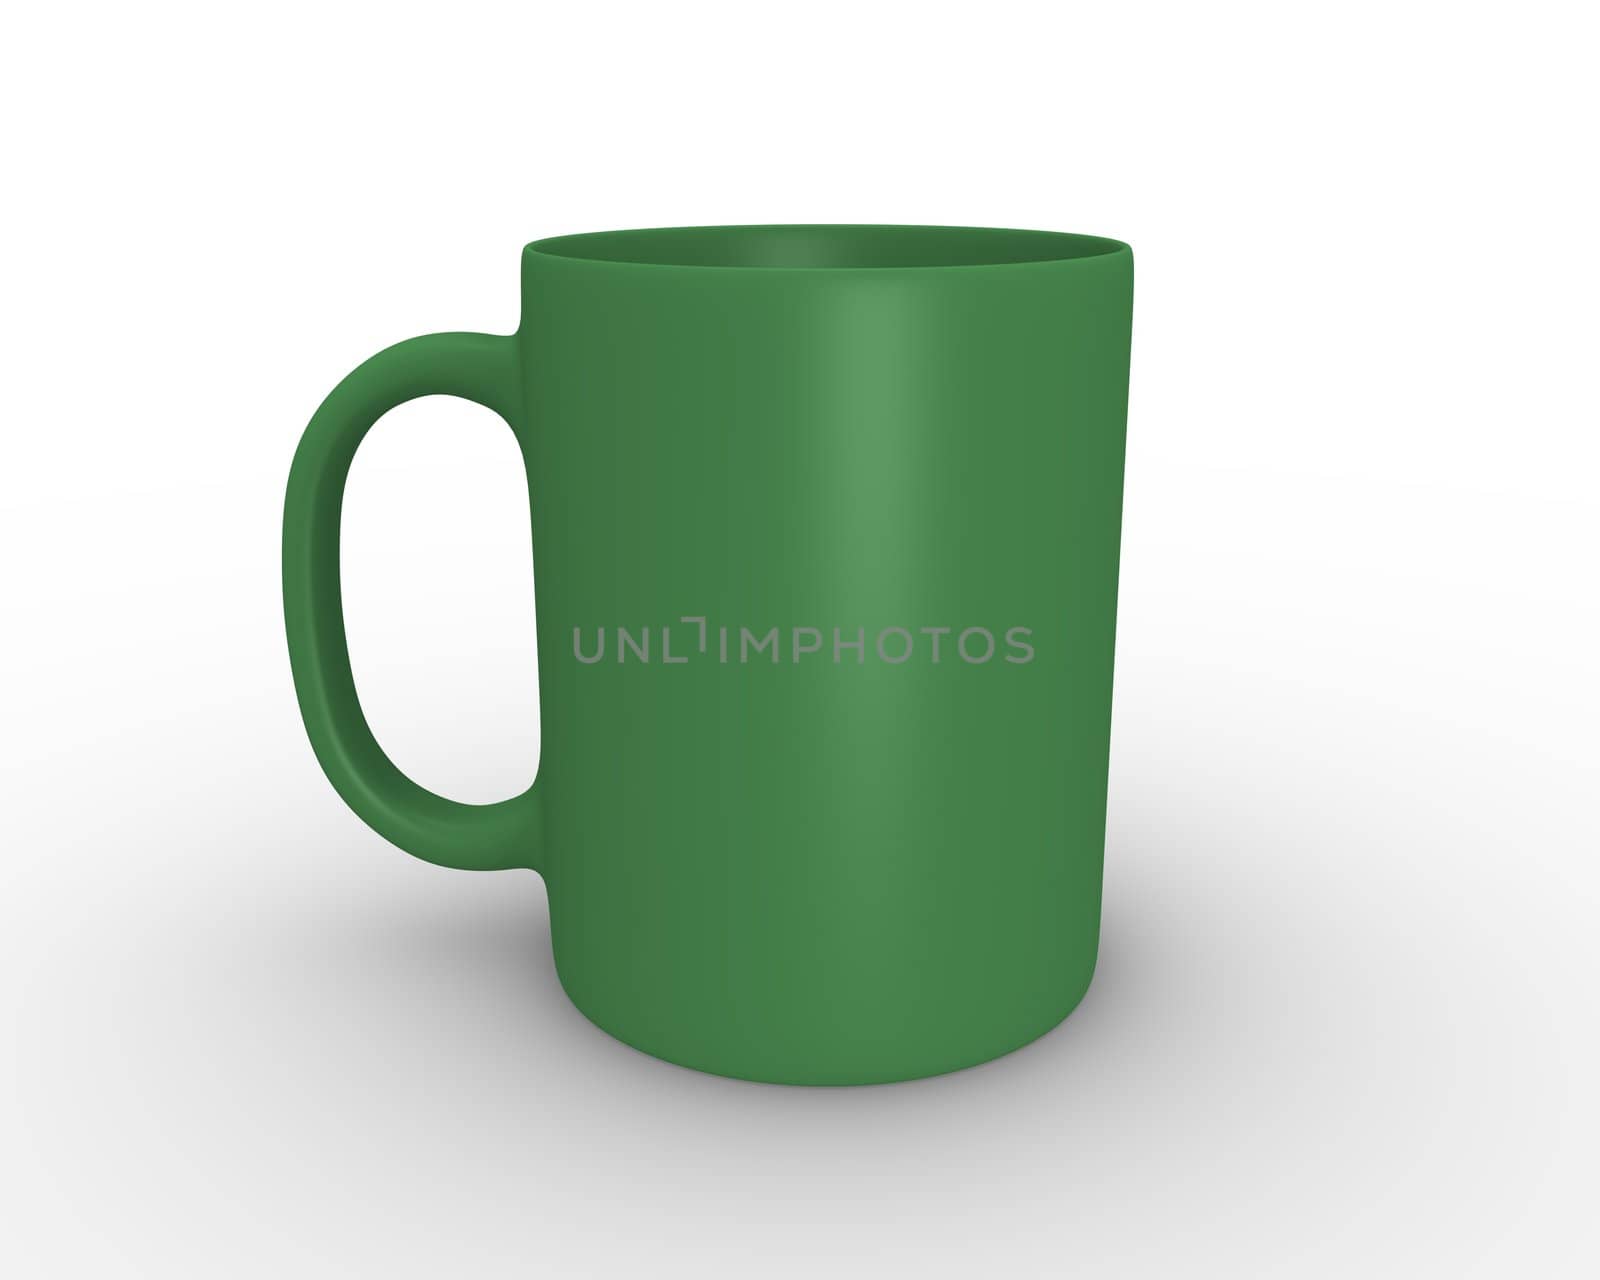 3D rendered illustration of green tea/coffee mug
